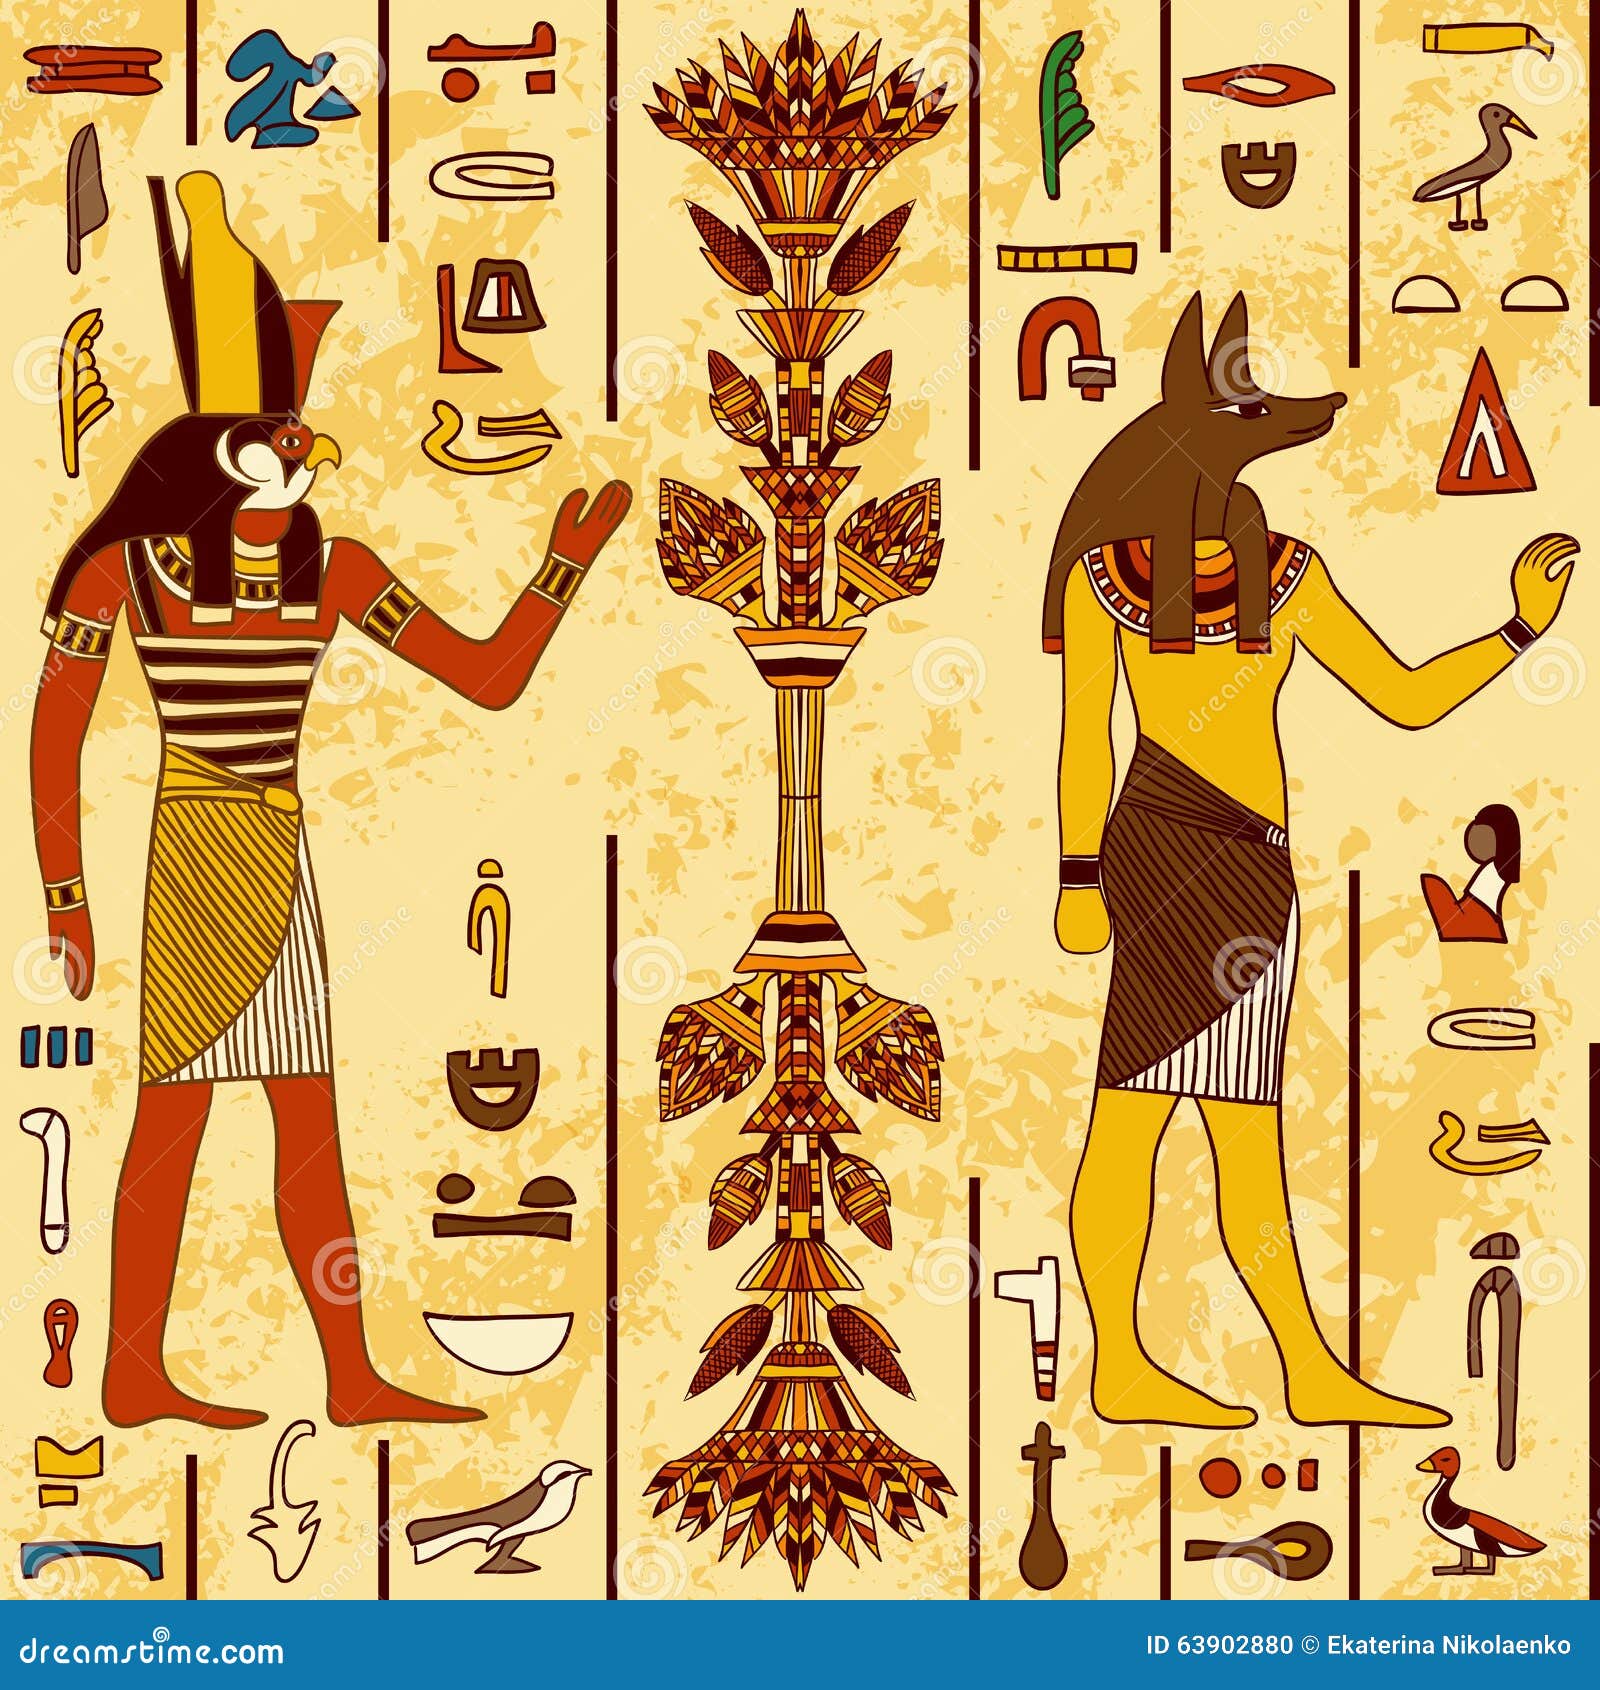 ancient egyptian religion thesis